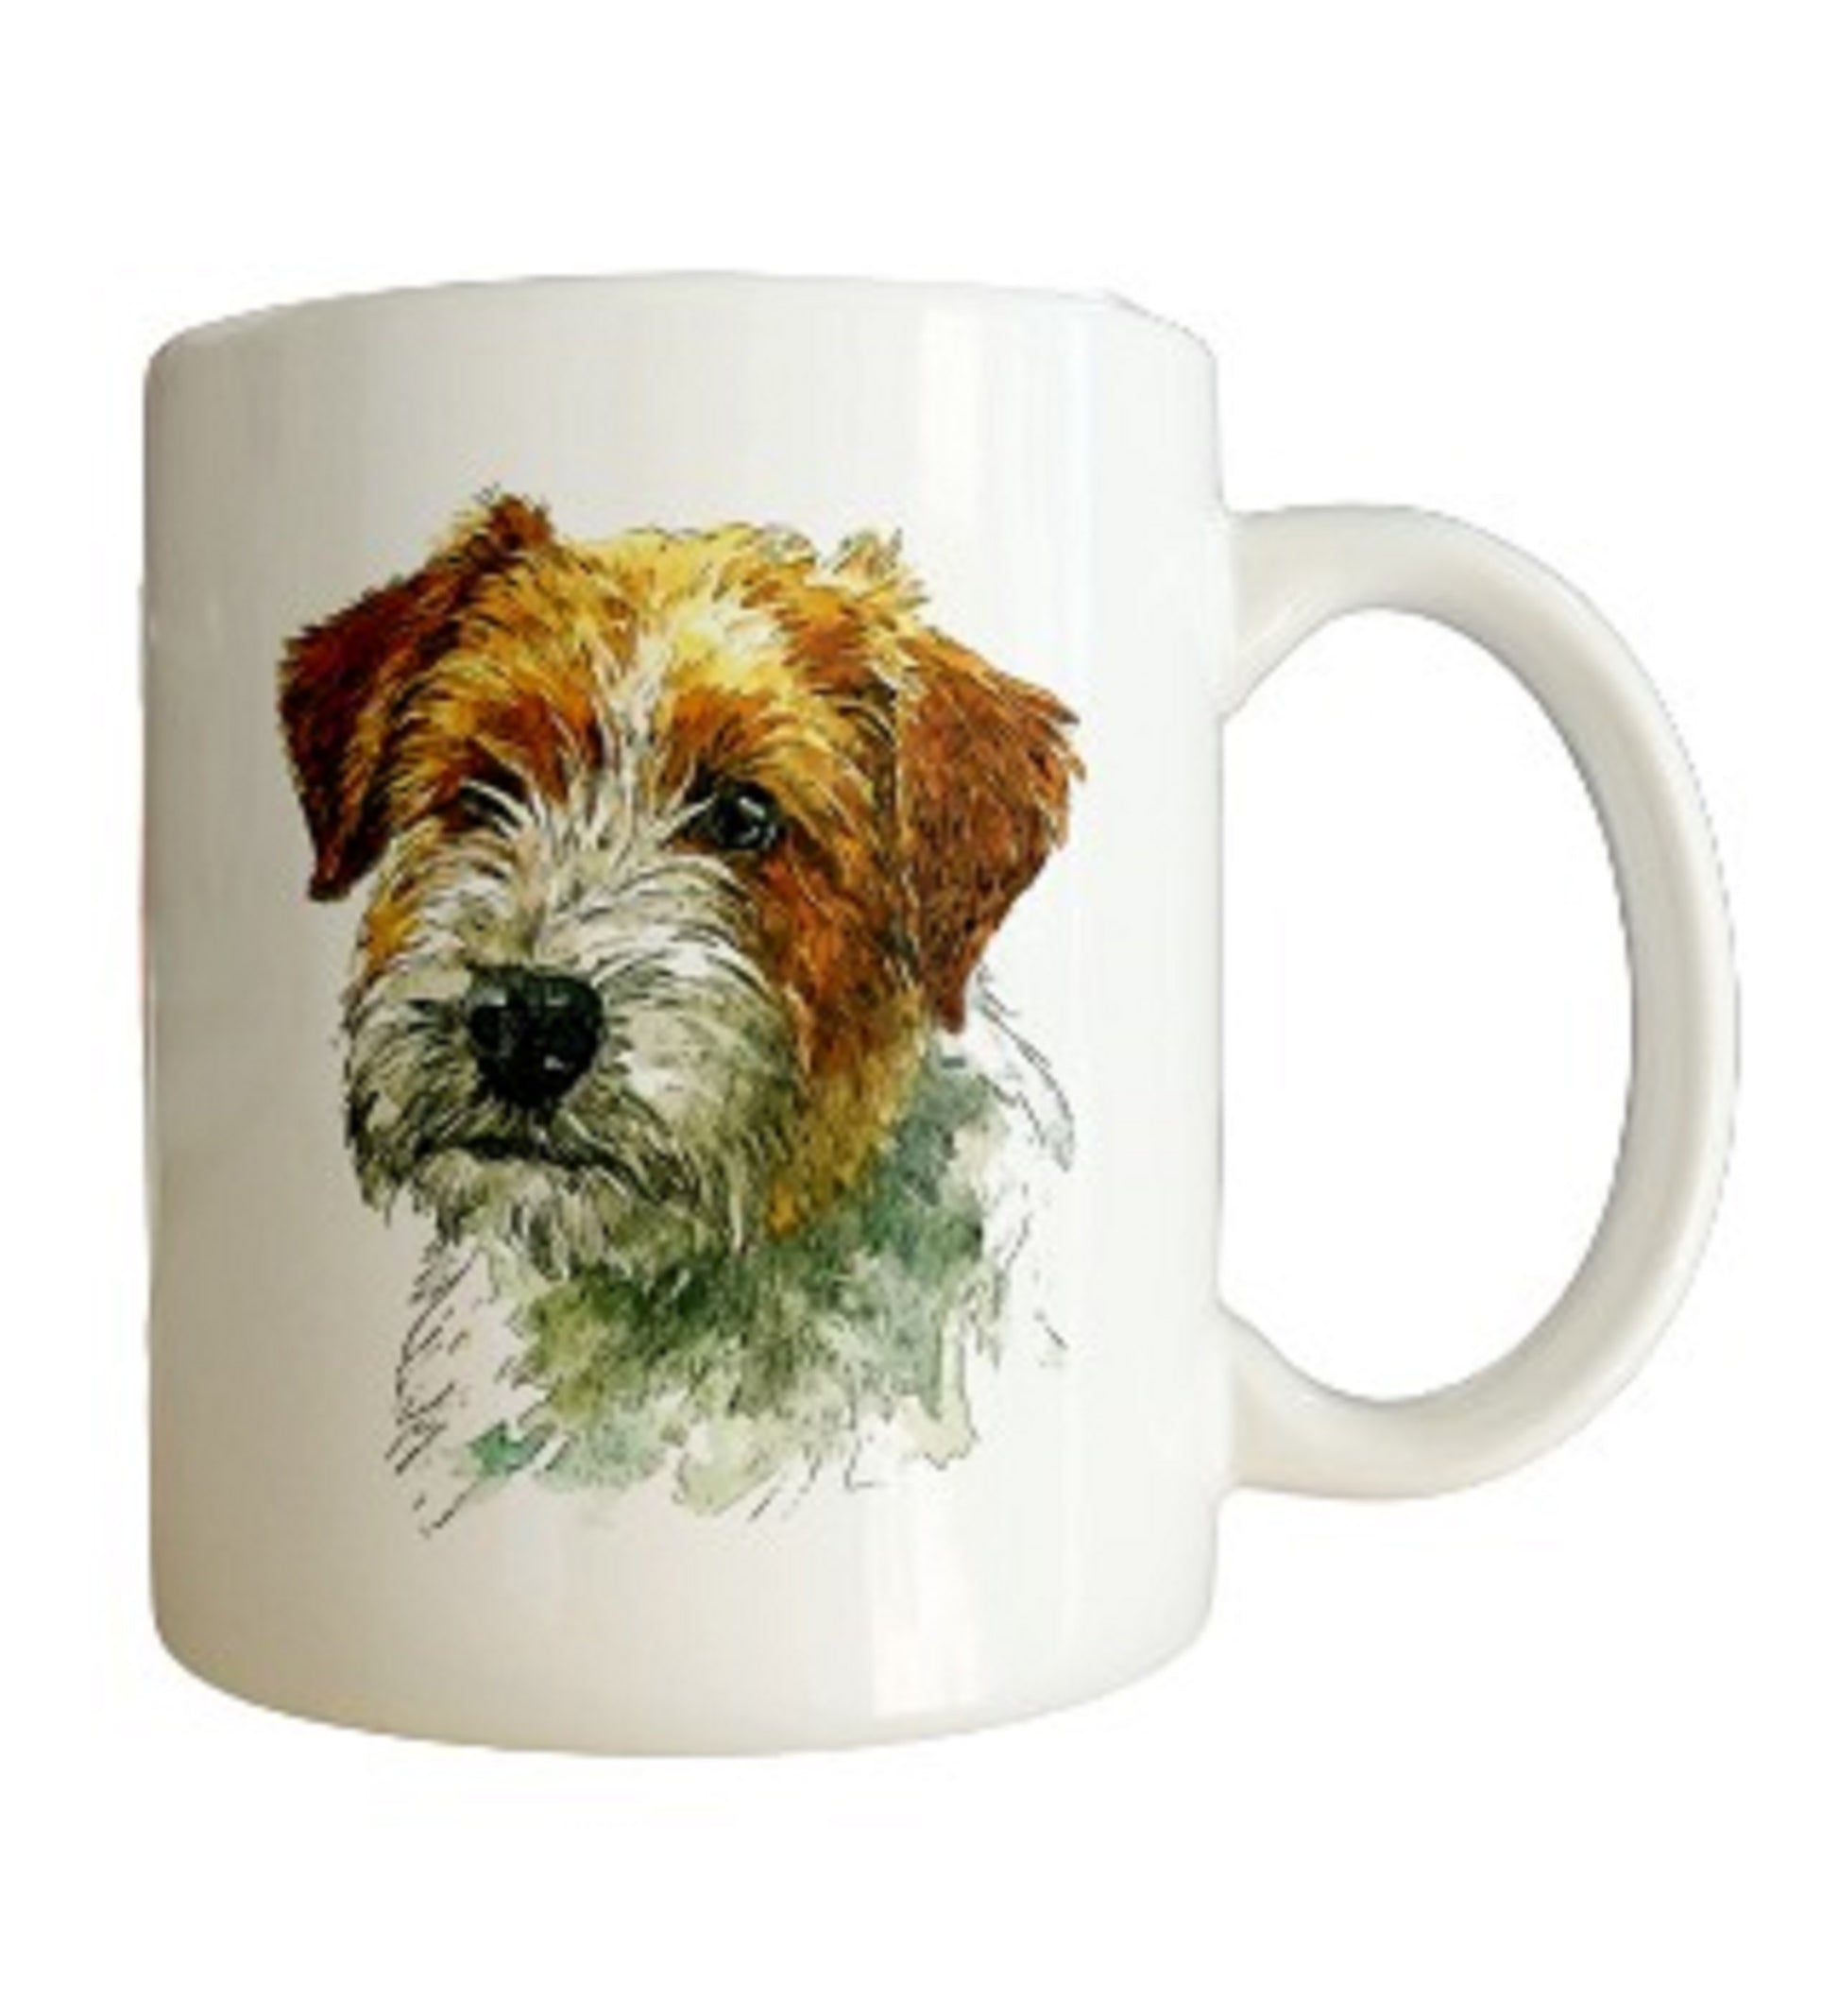  Jack Russell Terrier Dog Mug by Free Spirit Accessories sold by Free Spirit Accessories